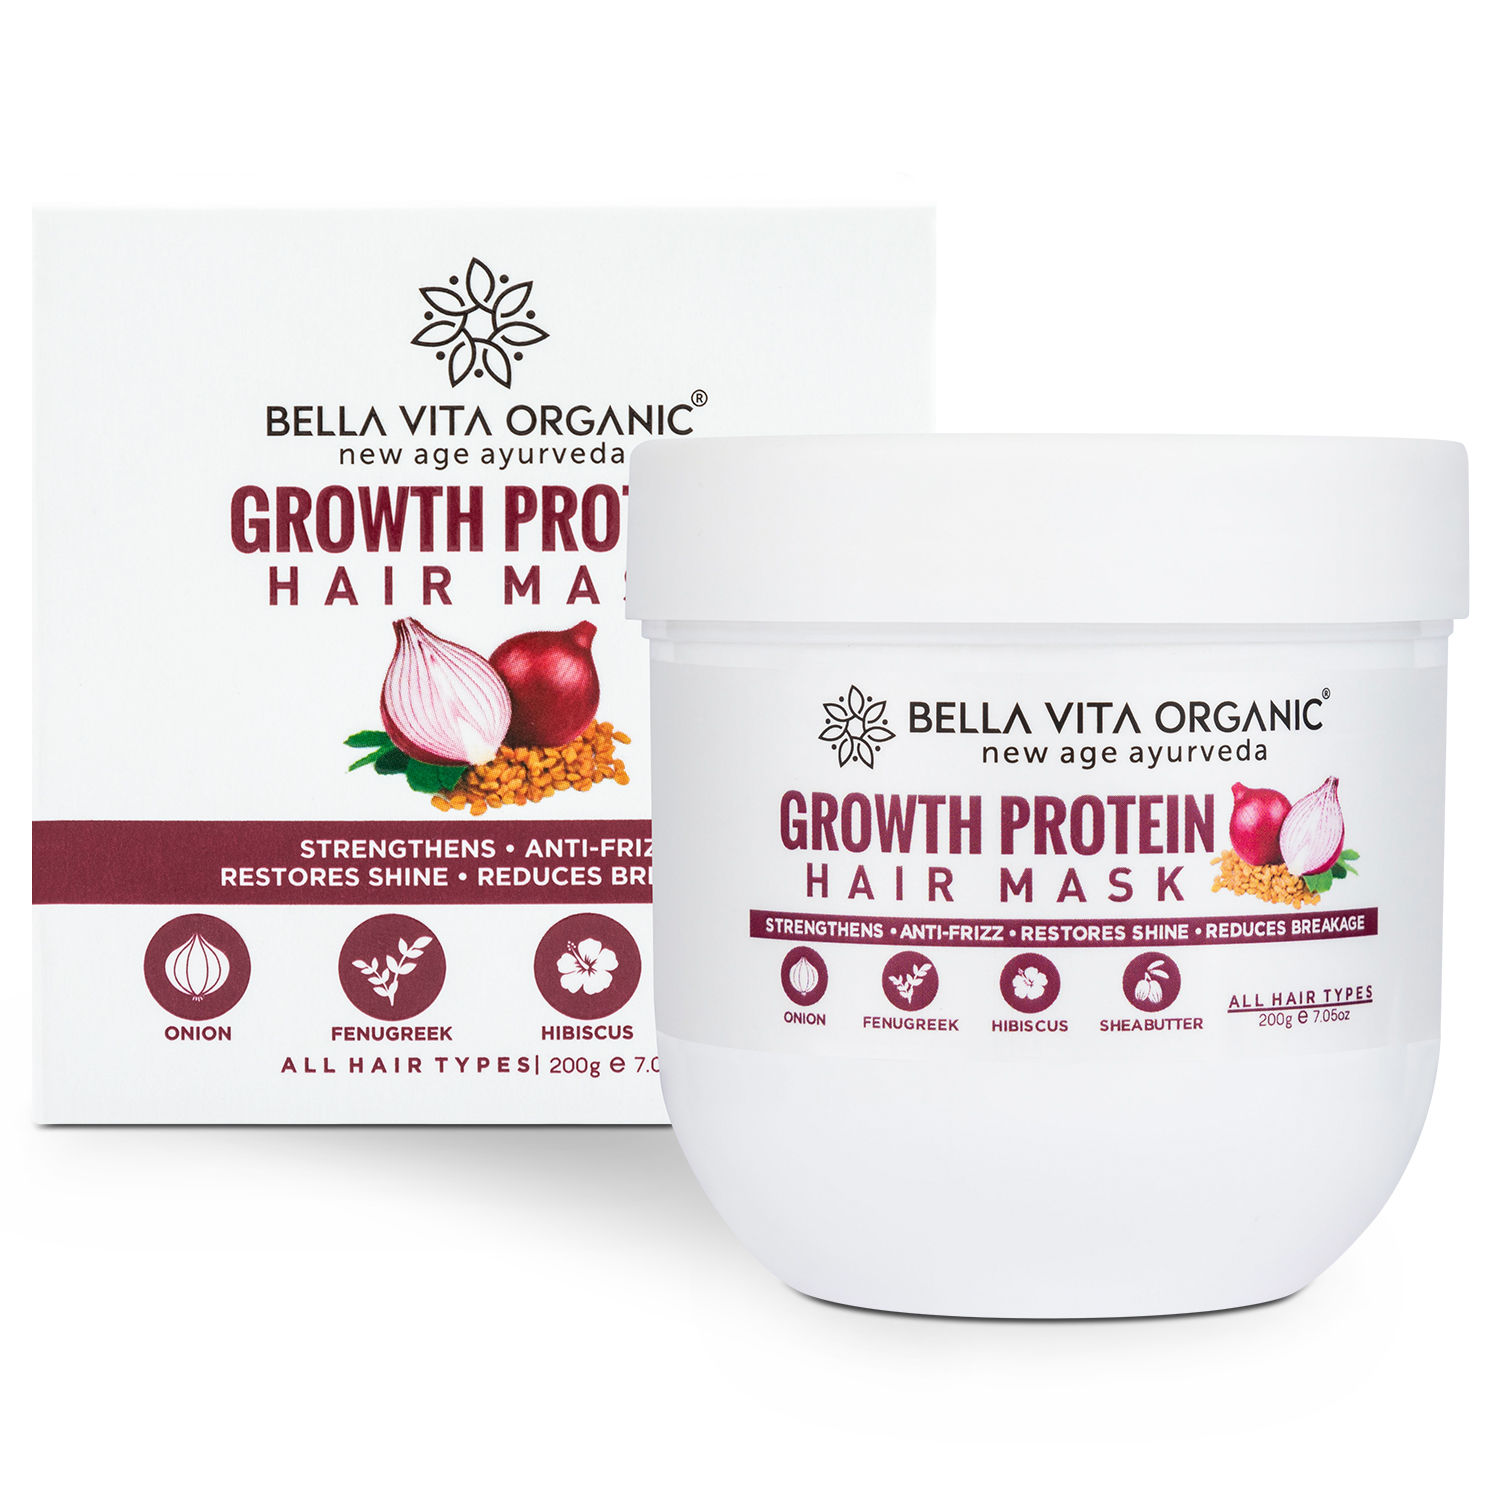 Bella Vita Organic Growth Protein Hair Mask